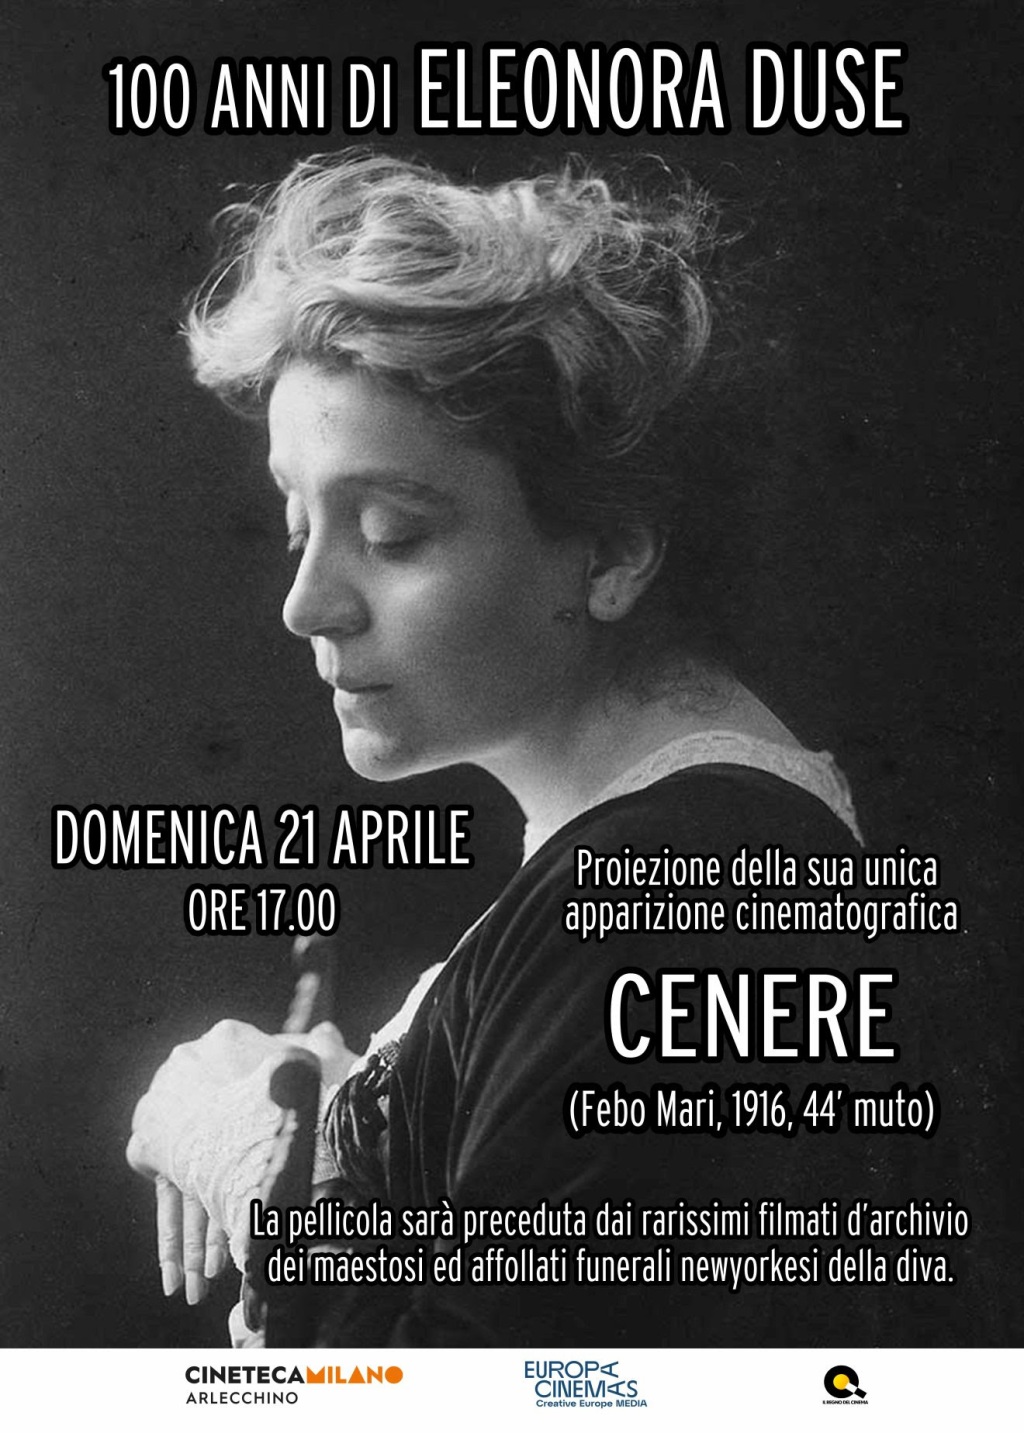 Cineteca Milano ricorda Eleonora Duse